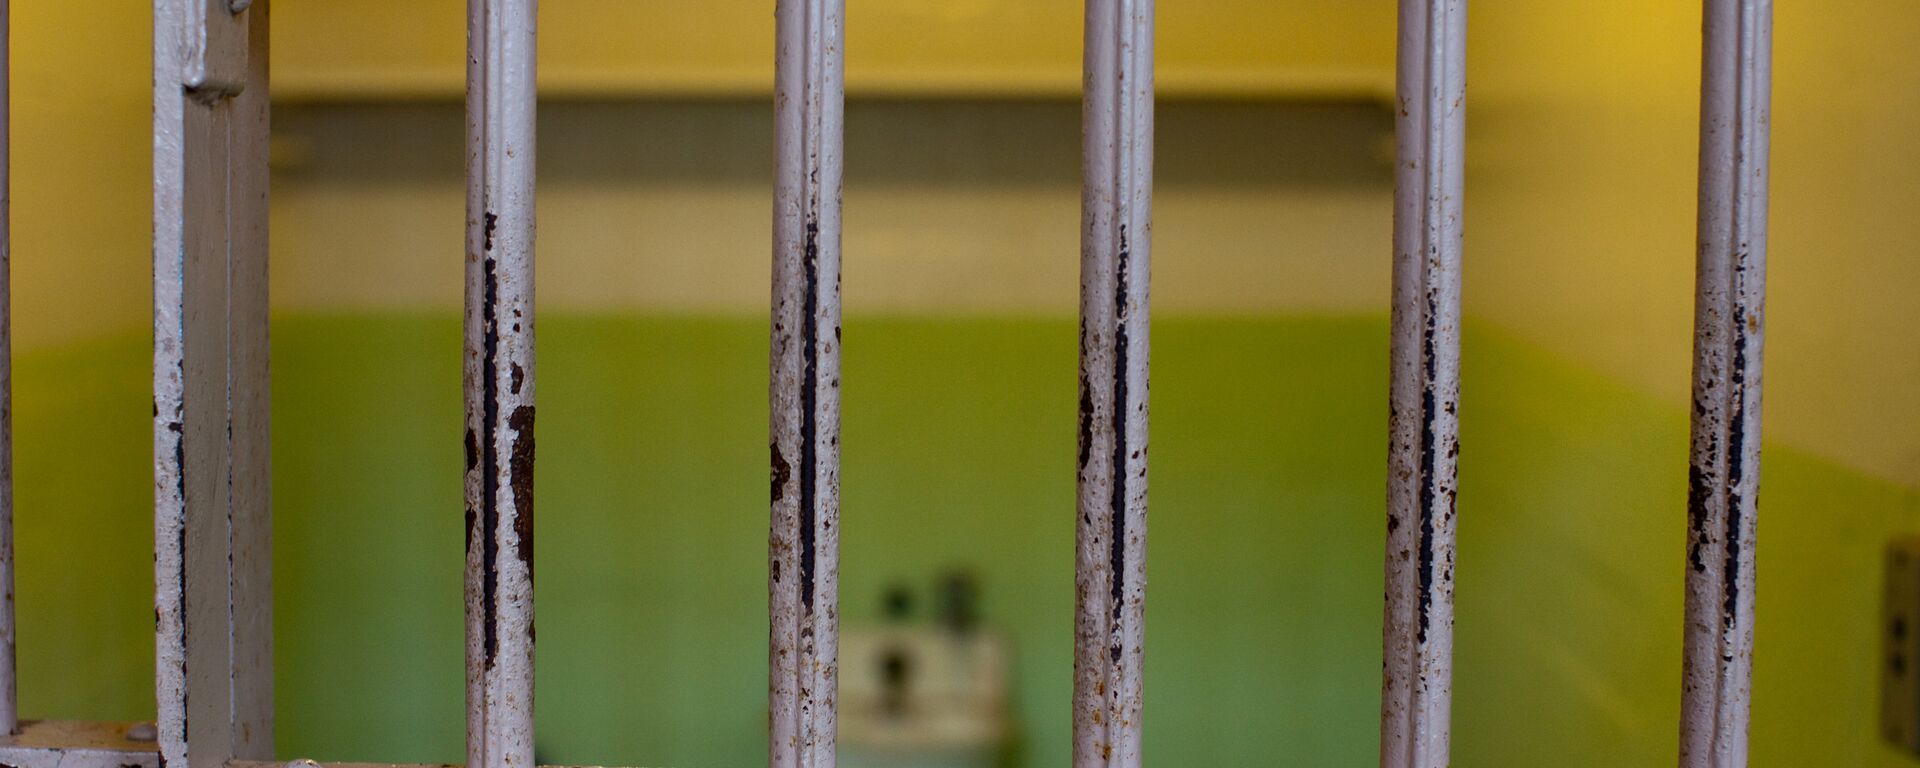 Las rejas de la cárcel (imagen referencial) - Sputnik International, 1920, 03.11.2021